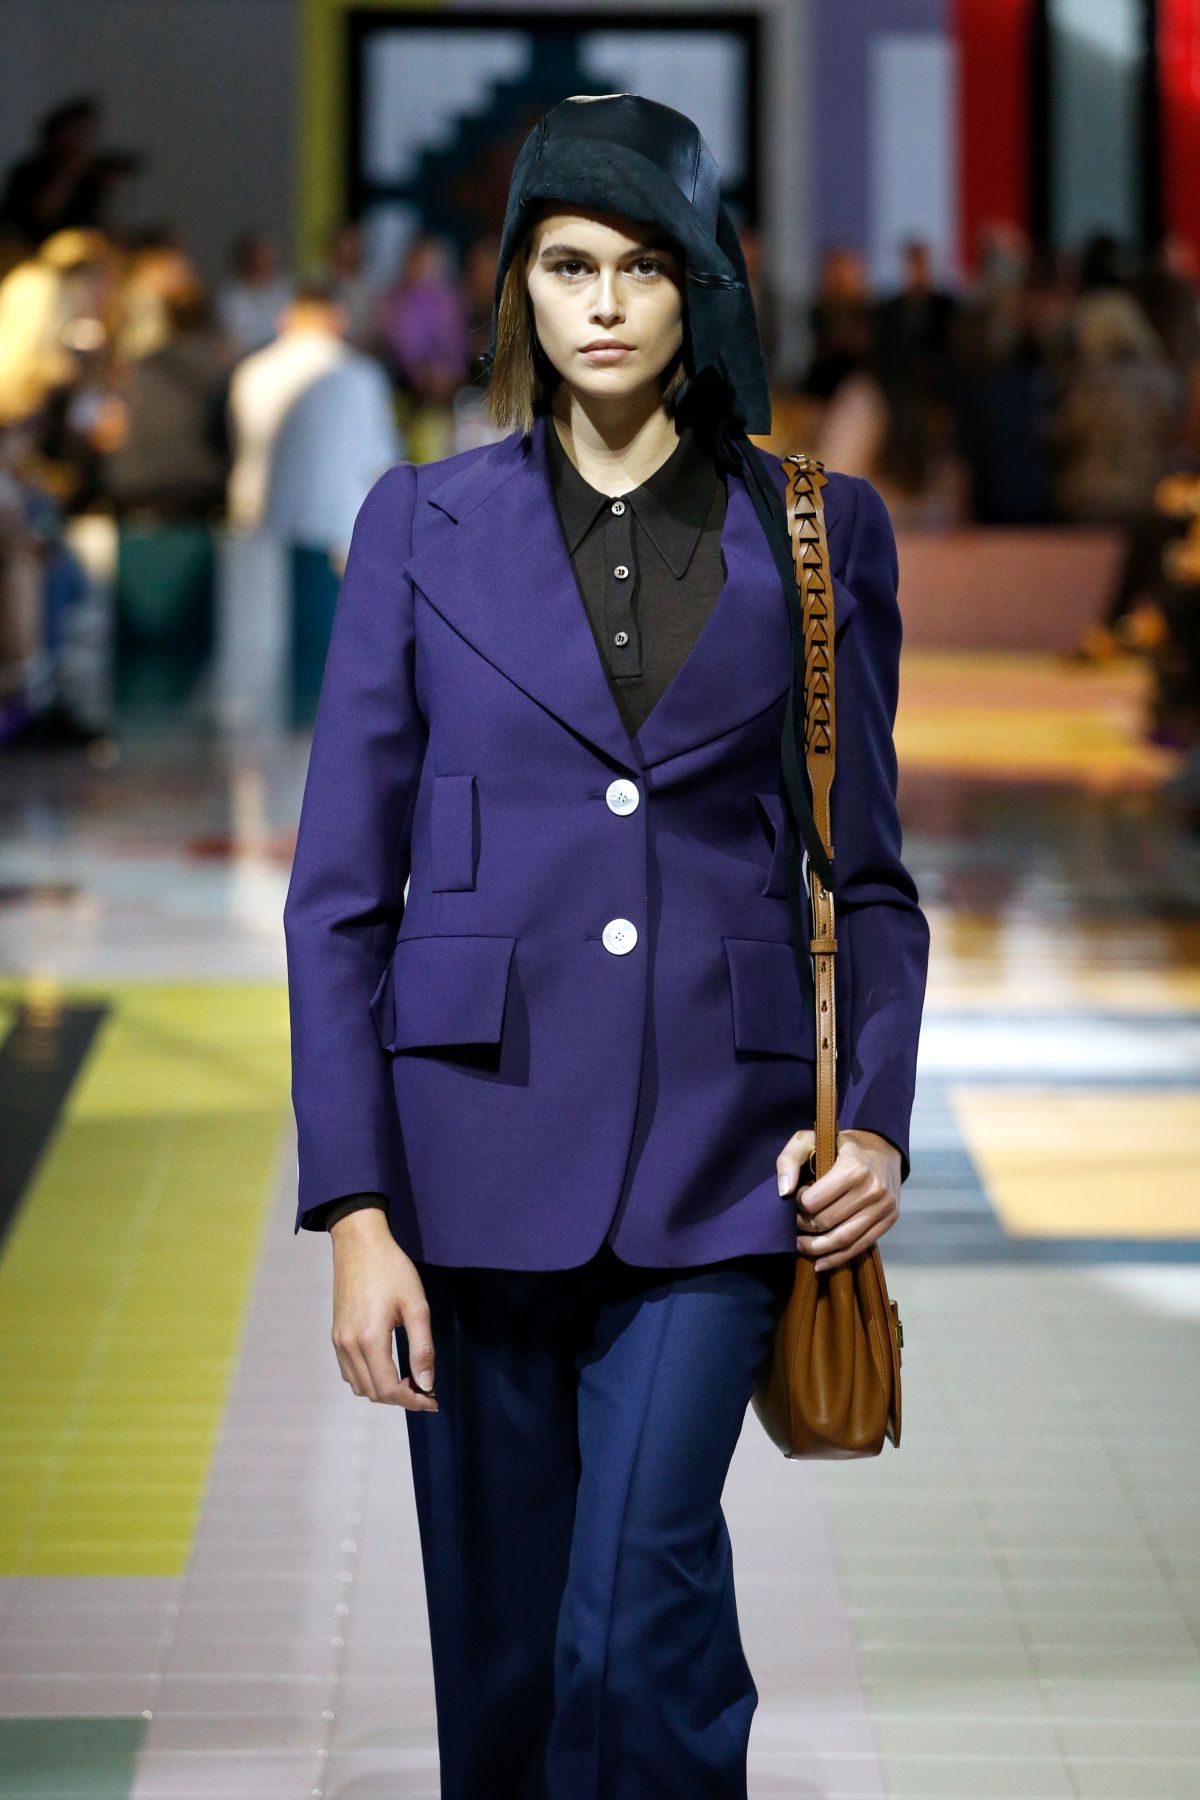 KAIA GERBER at Prada Ready to Wear Show at Milan Fashion Week 09/18 ...